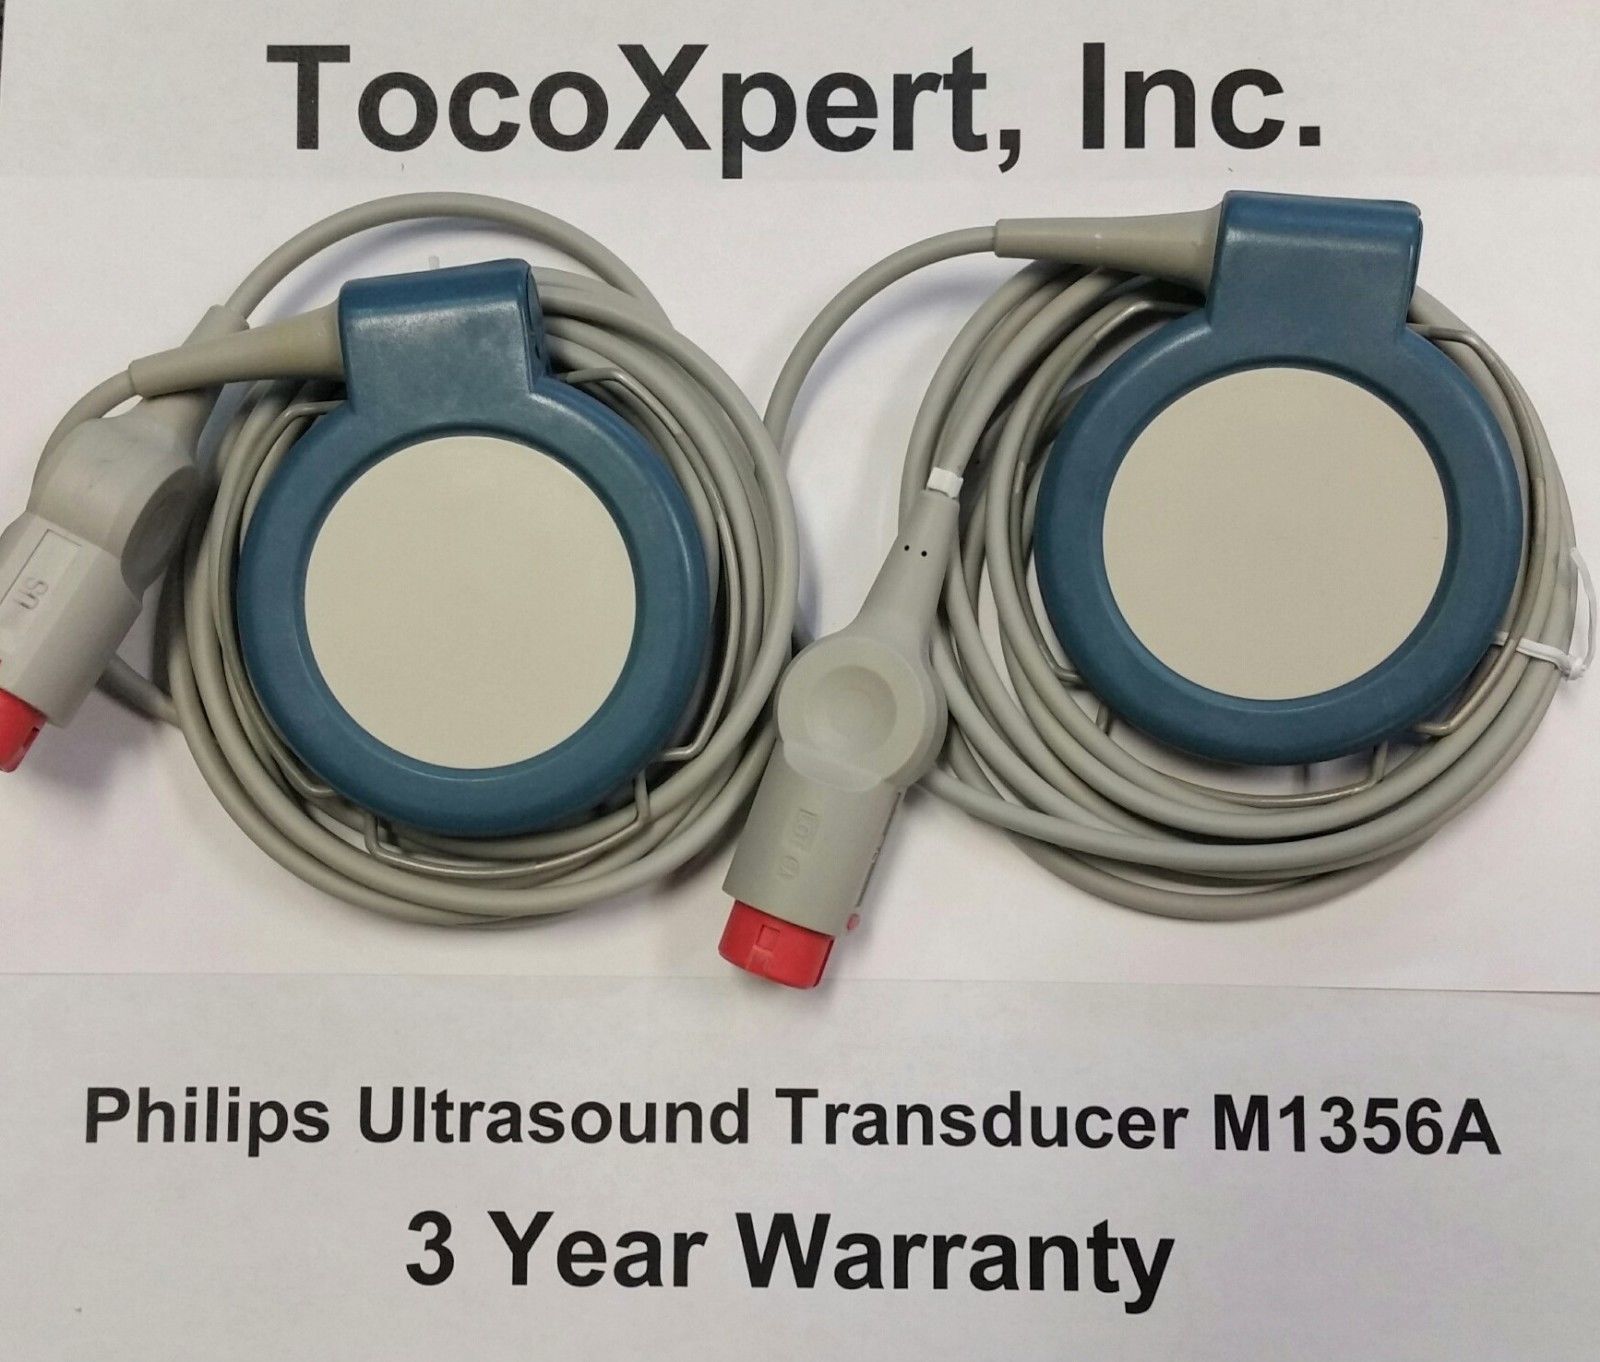 HP Philips M1356A Ultrasound Transducer $249 - LIFETIME Warranty! 100% ORIGINAL 192243004454